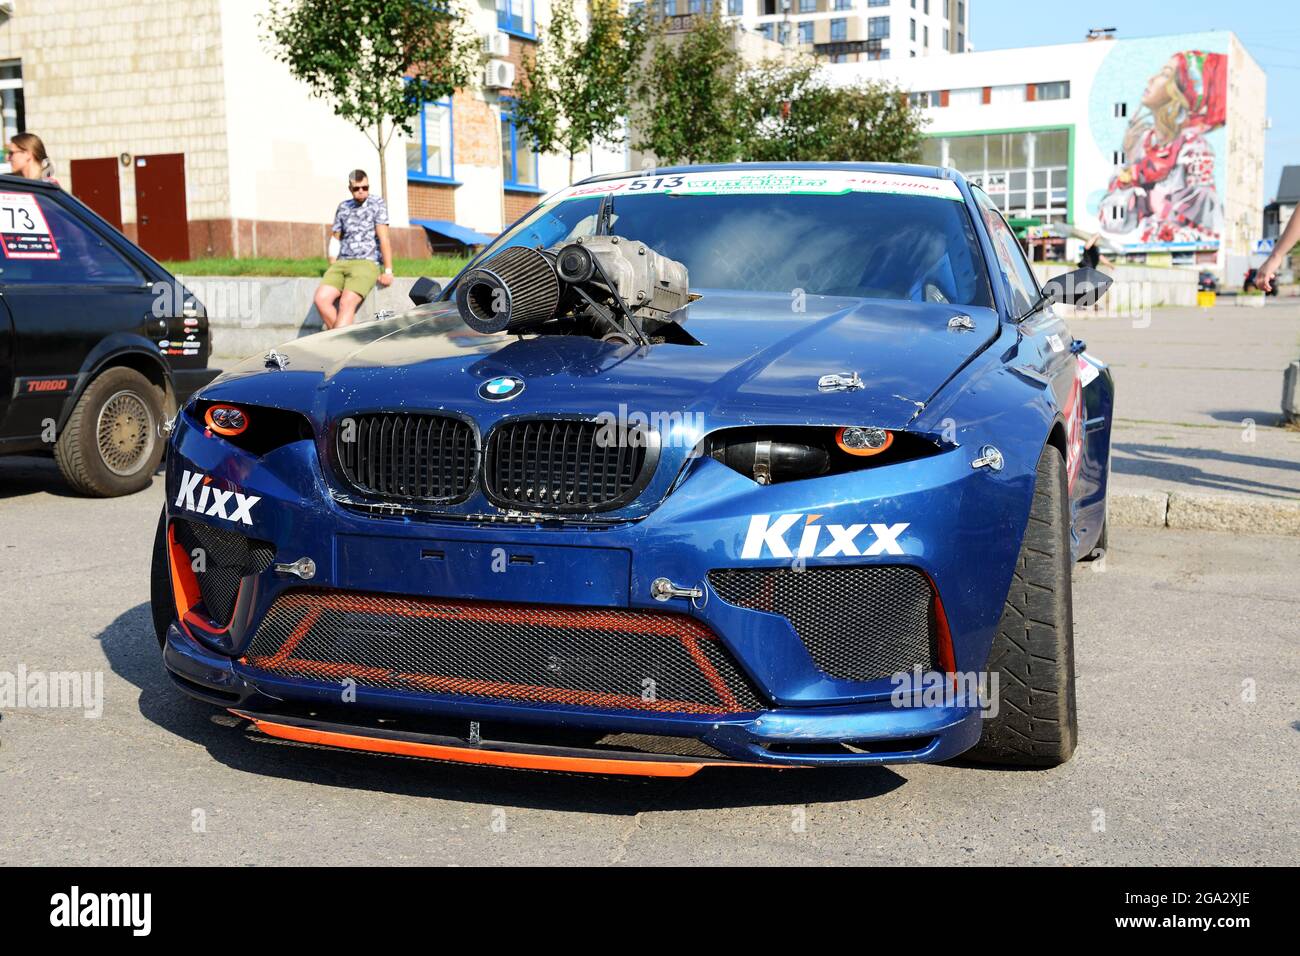 BILA TSERKVA - JULY 24: The Drift modified BMW 3-series car is on Professional Ukrainian Drag Racing Series Show, on July 24, 2021 in Bila Tserkva, Uk Stock Photo